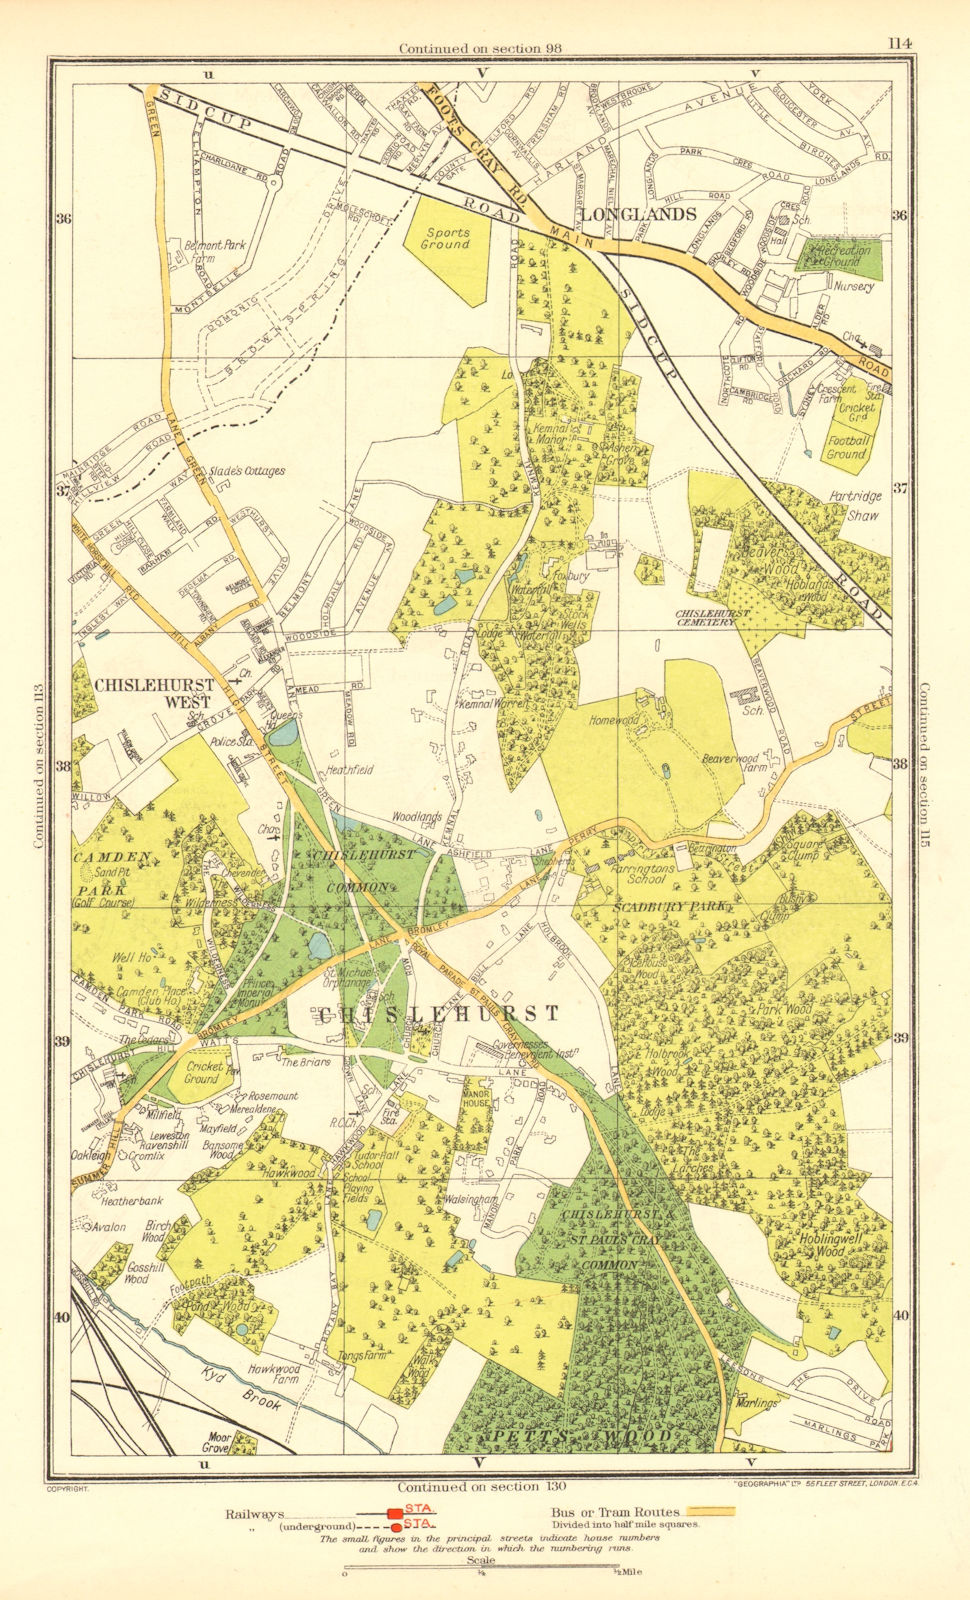 CHISLEHURST. Chislehurst West Longlands Pett's Wood Sidcup Park Wood 1937 map